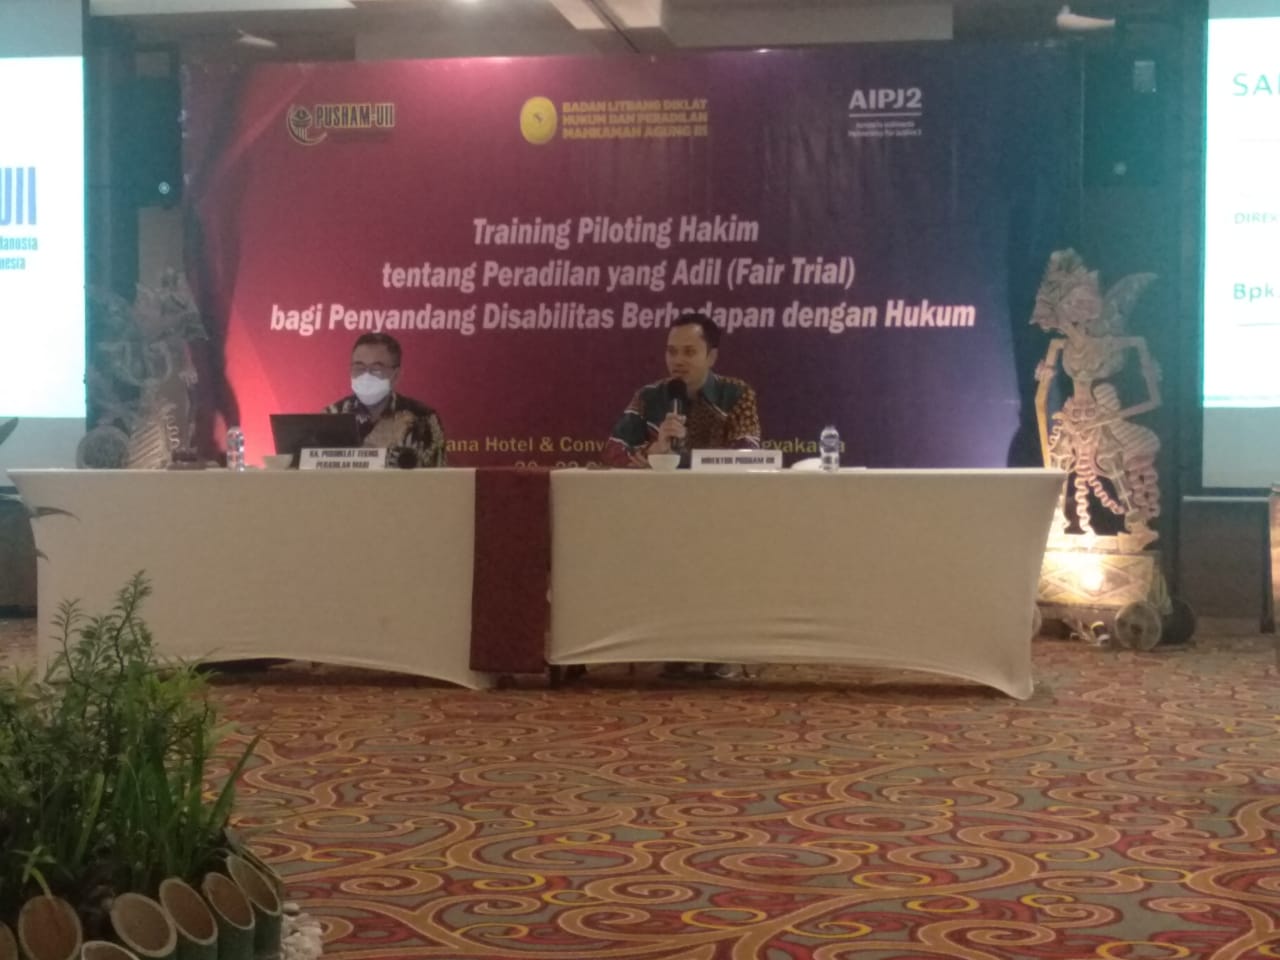 Hakim Pengadilan Negeri Yogyakarta Mengikuti Training Piloting Hakim tentang Peradilan yang Adil Bagi Penyandang Disabilitas yang Berhadapan dengan Hukum